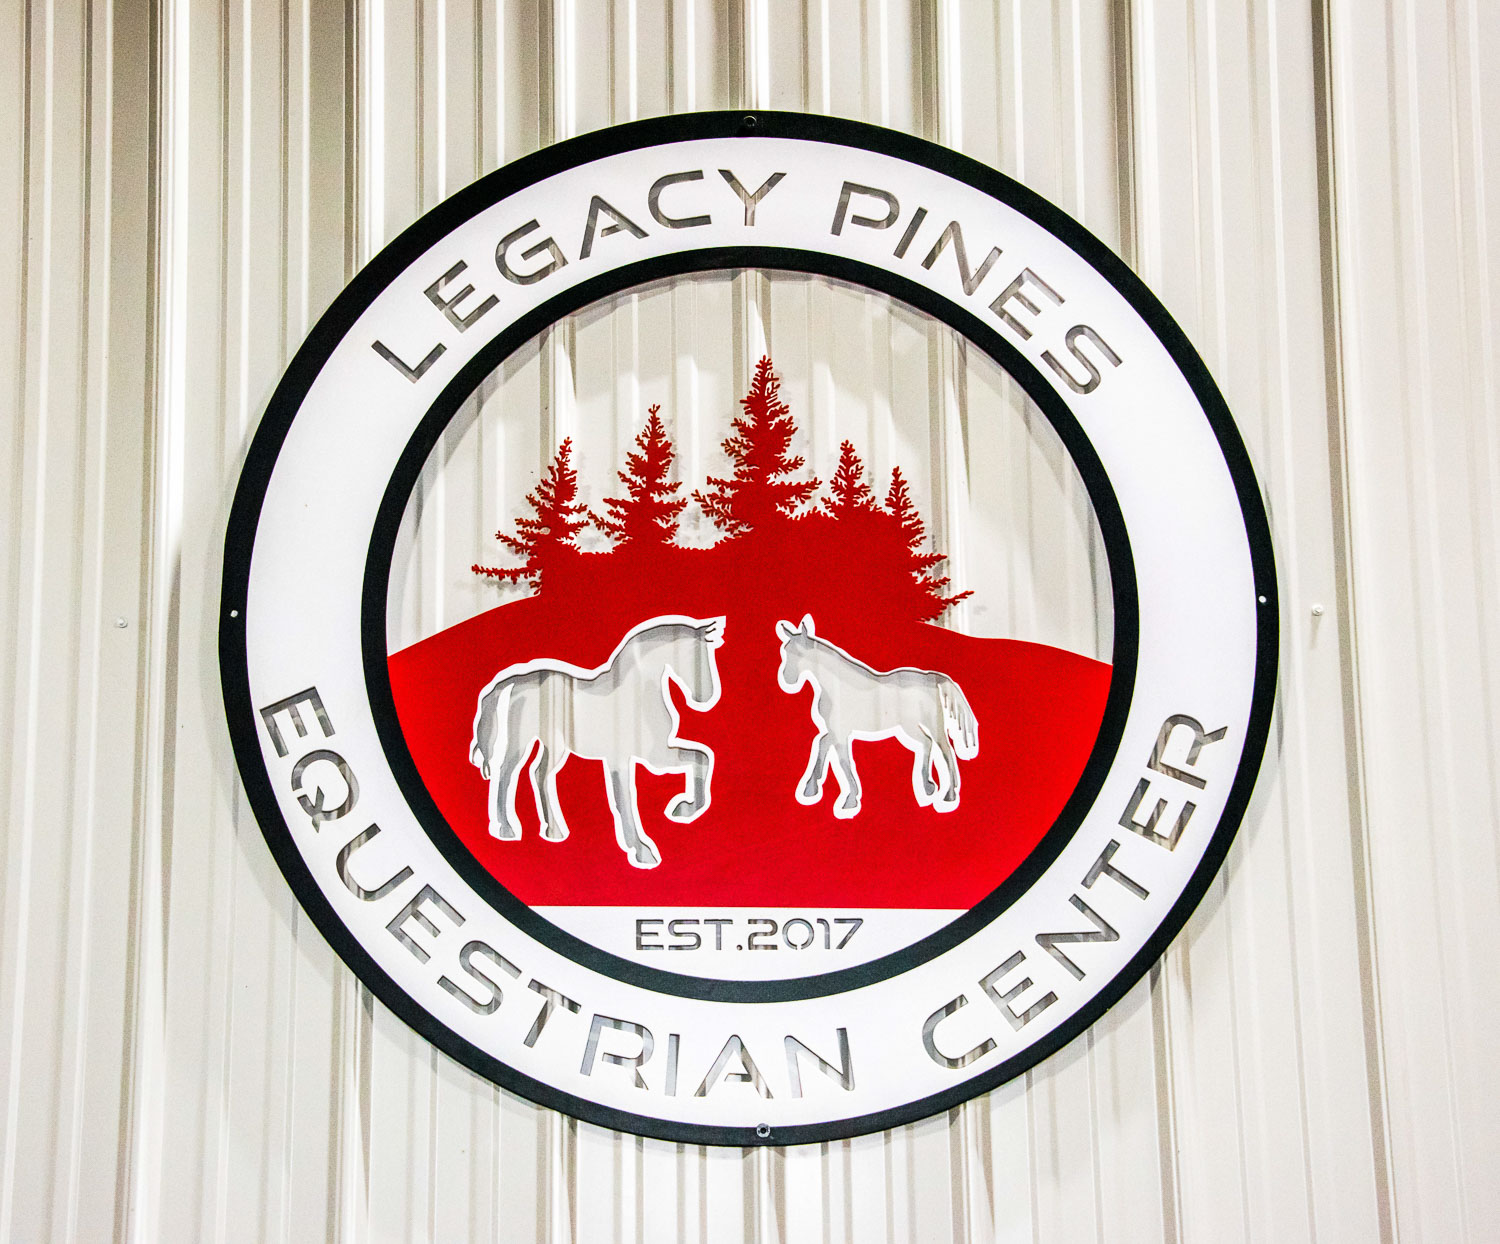 Legacy Pines Equestrian Center custom signage 1.jpg